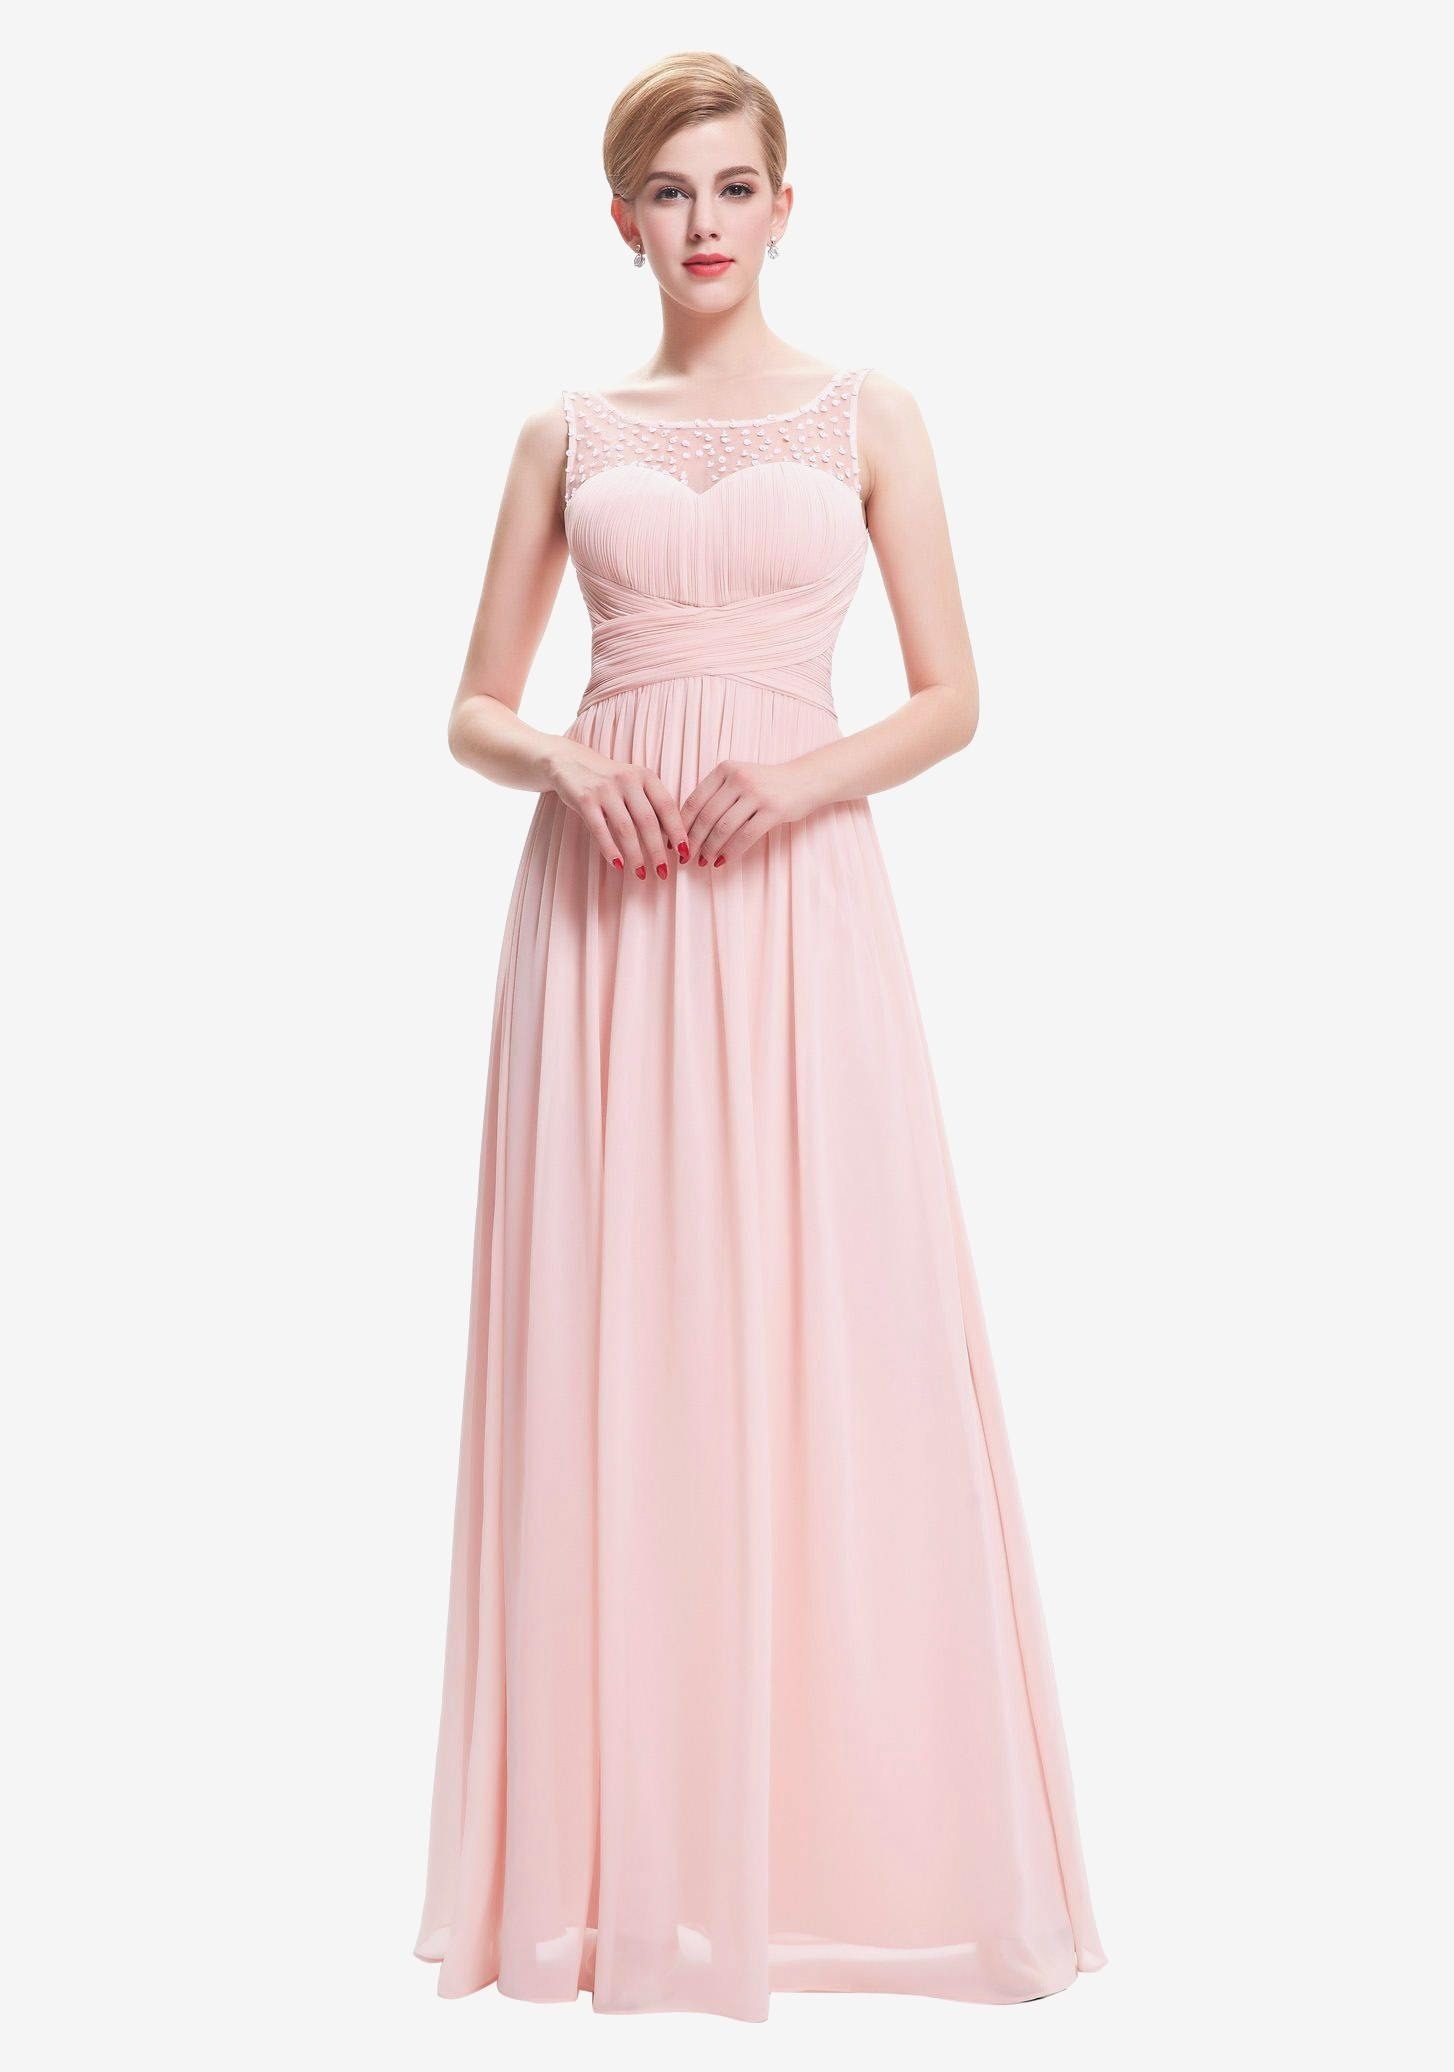 Luxurius Rosa Langes Kleid Mit Glitzer Galerie13 Cool Rosa Langes Kleid Mit Glitzer Boutique